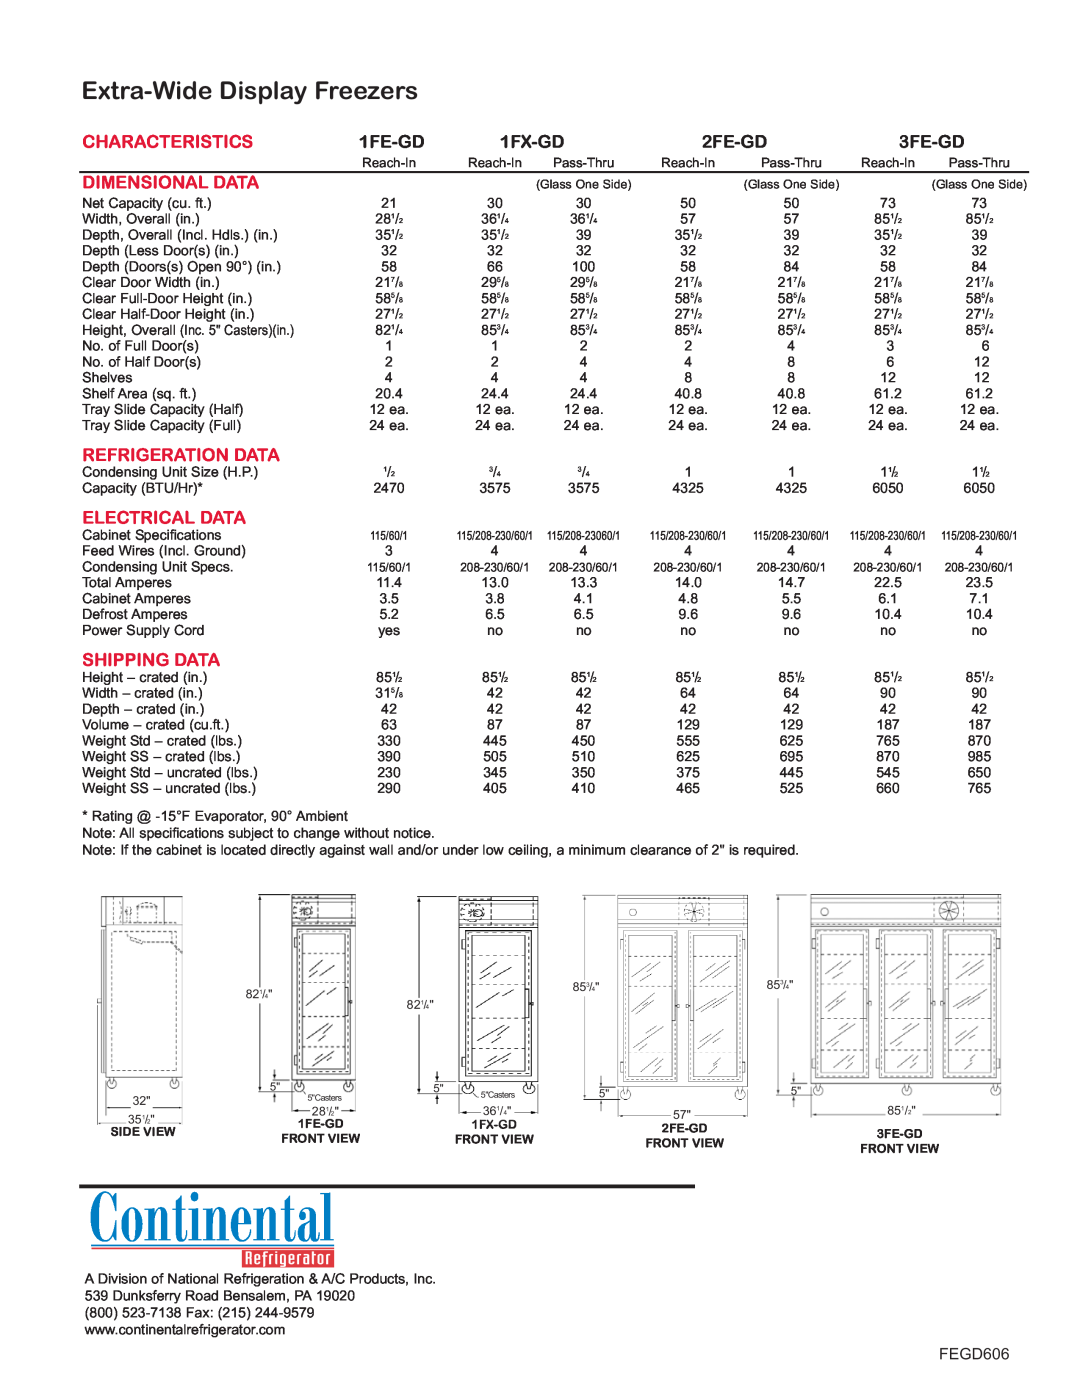 Continental Refrigerator 1FE-GD 1FX-GD, 2FE-GD, 3FE-GD, Extra-WideDisplay Freezers, Characteristics, Dimensional Data 